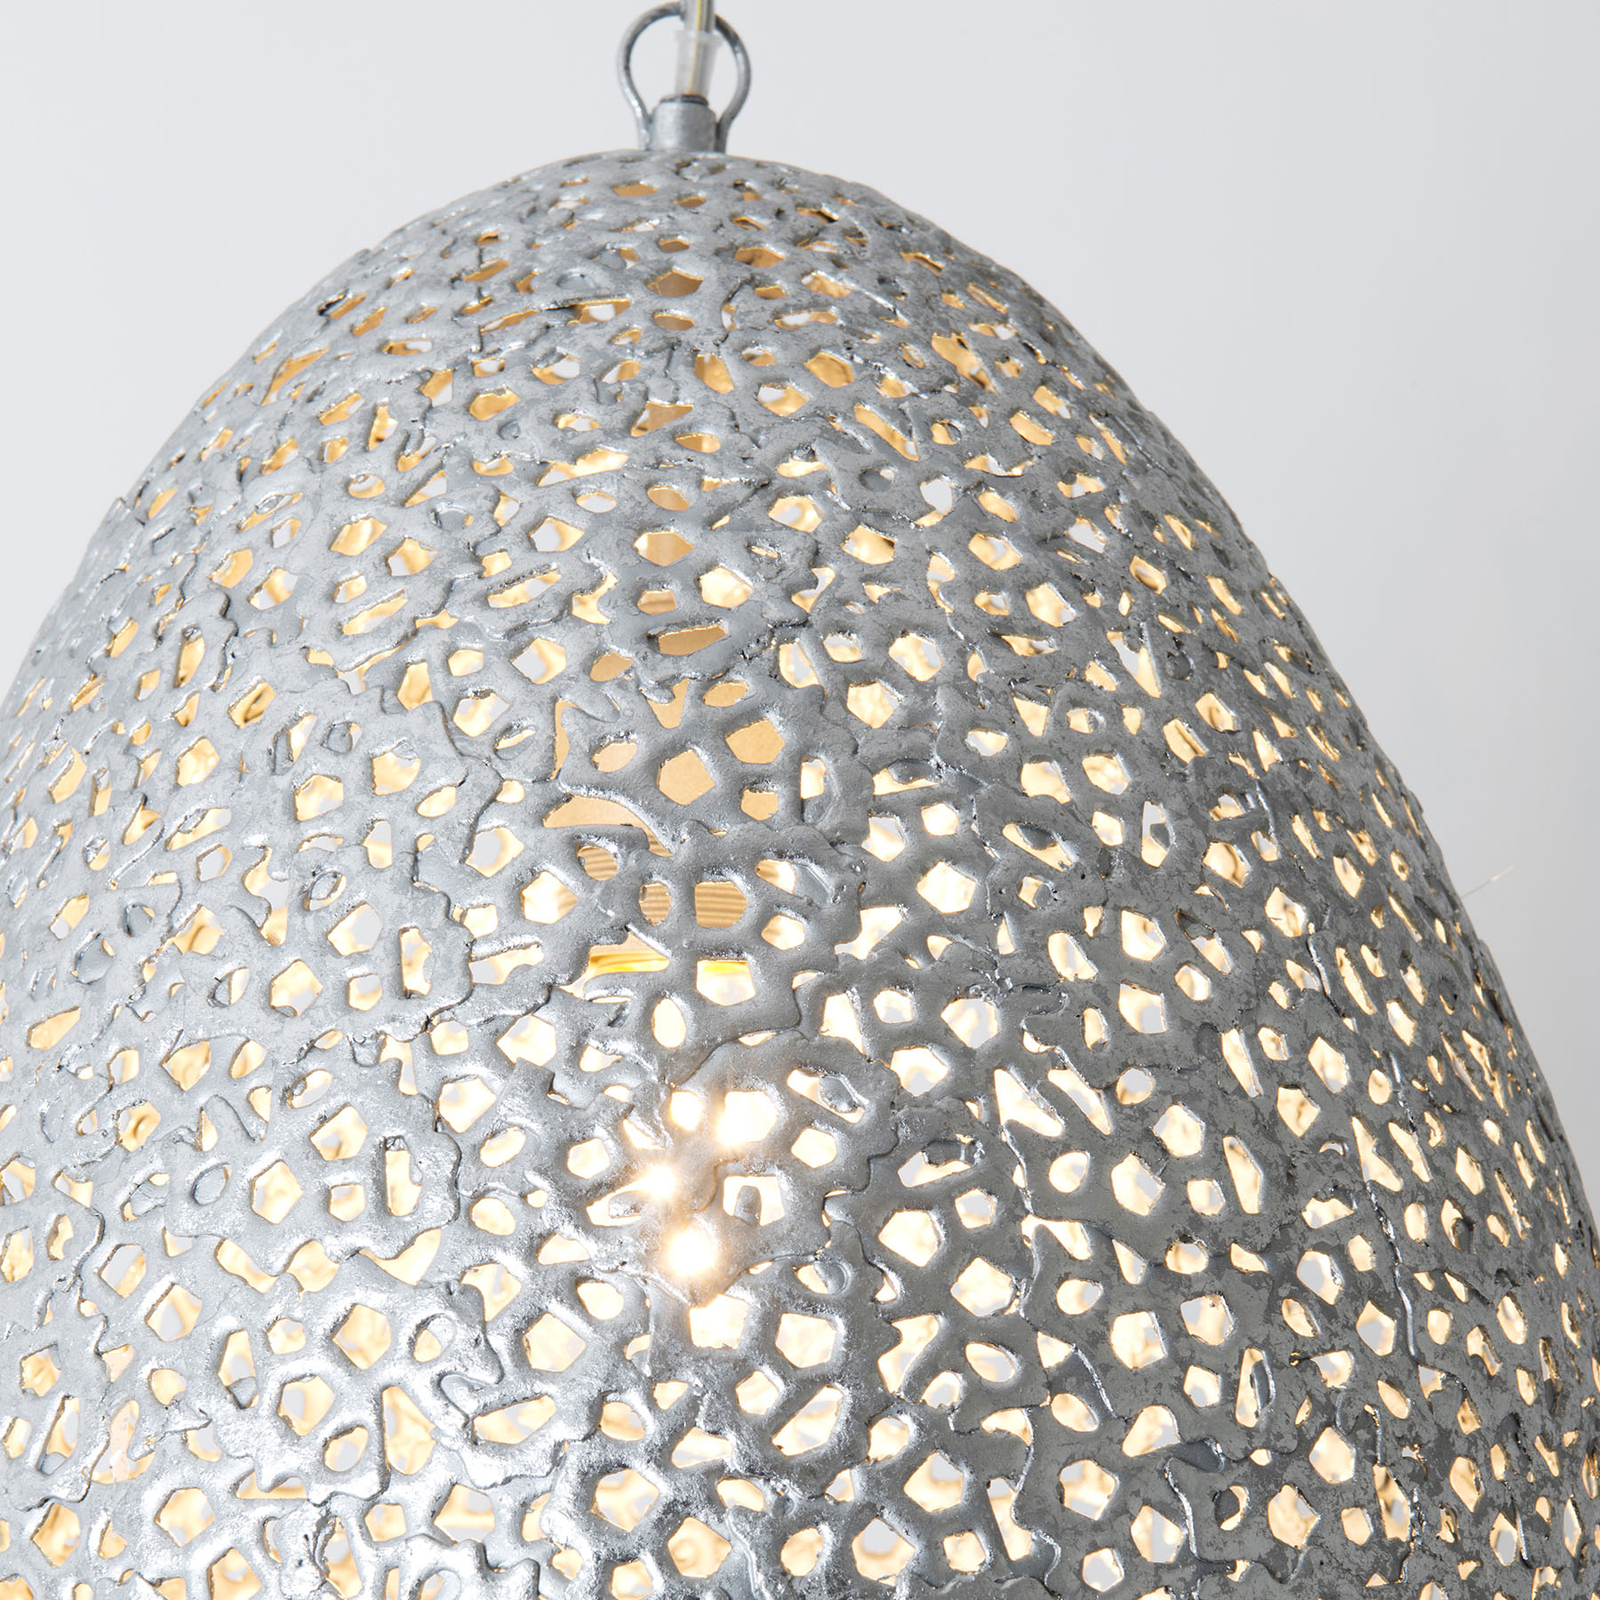 Cavalliere hanglamp, zilver, Ø 34 cm